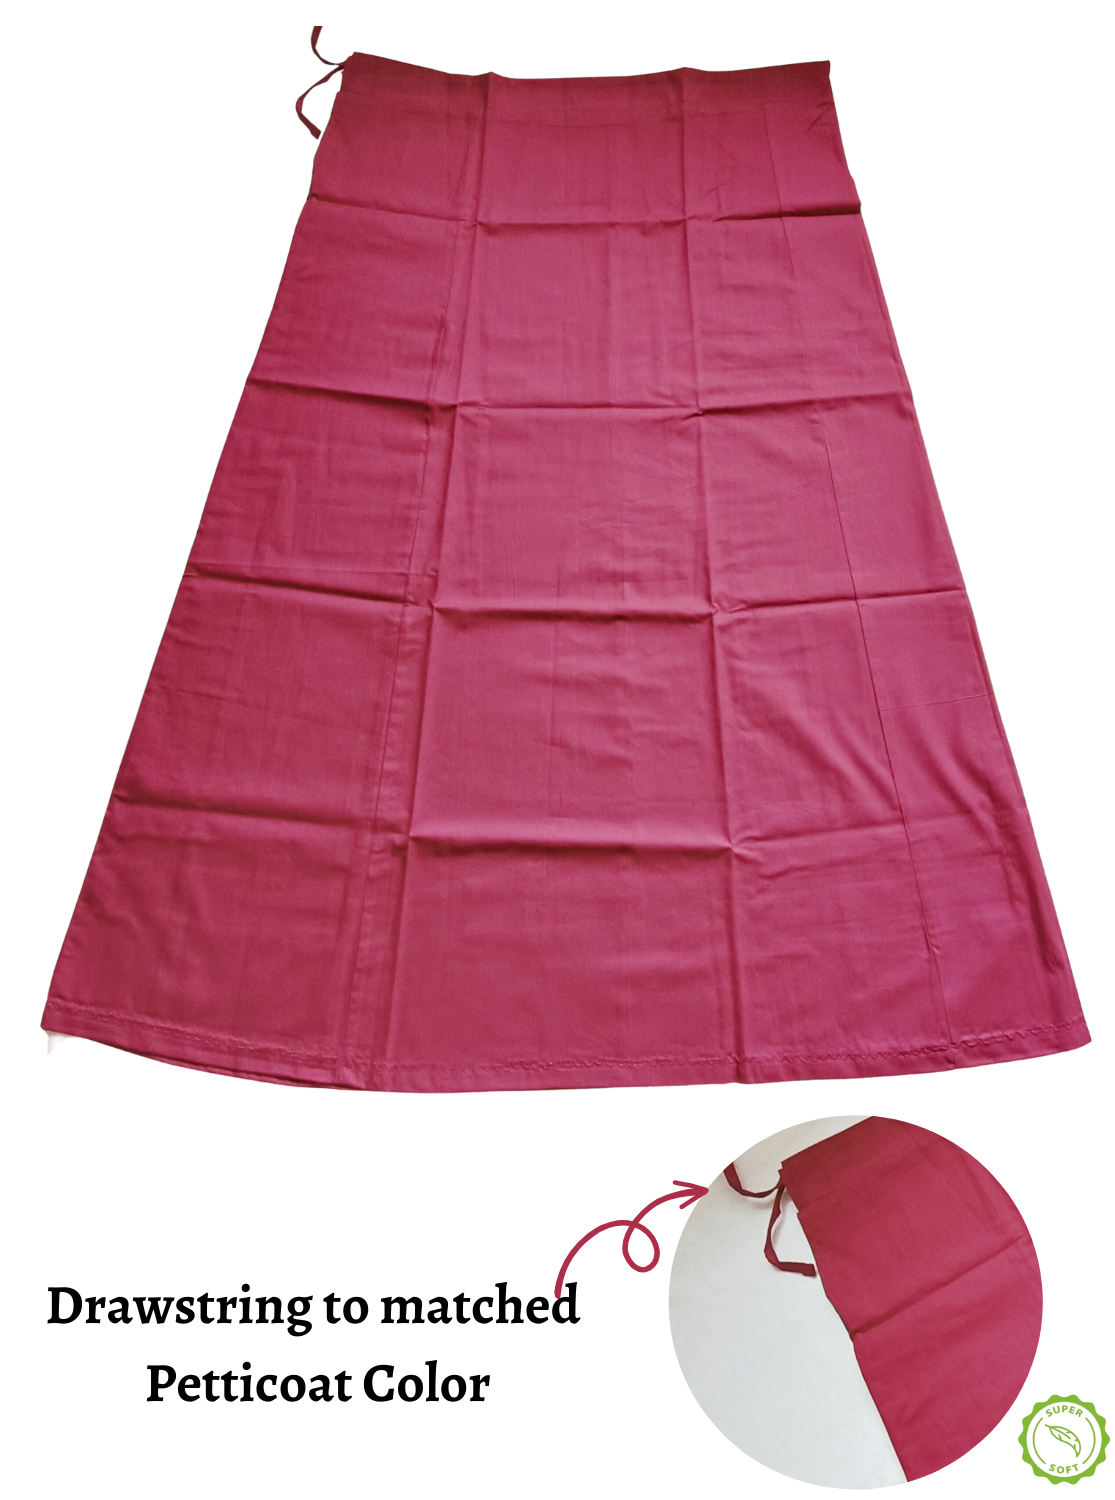 MANGAI Superior Cotton Petticoats - 8 Part Premium Embroidery Petticoats